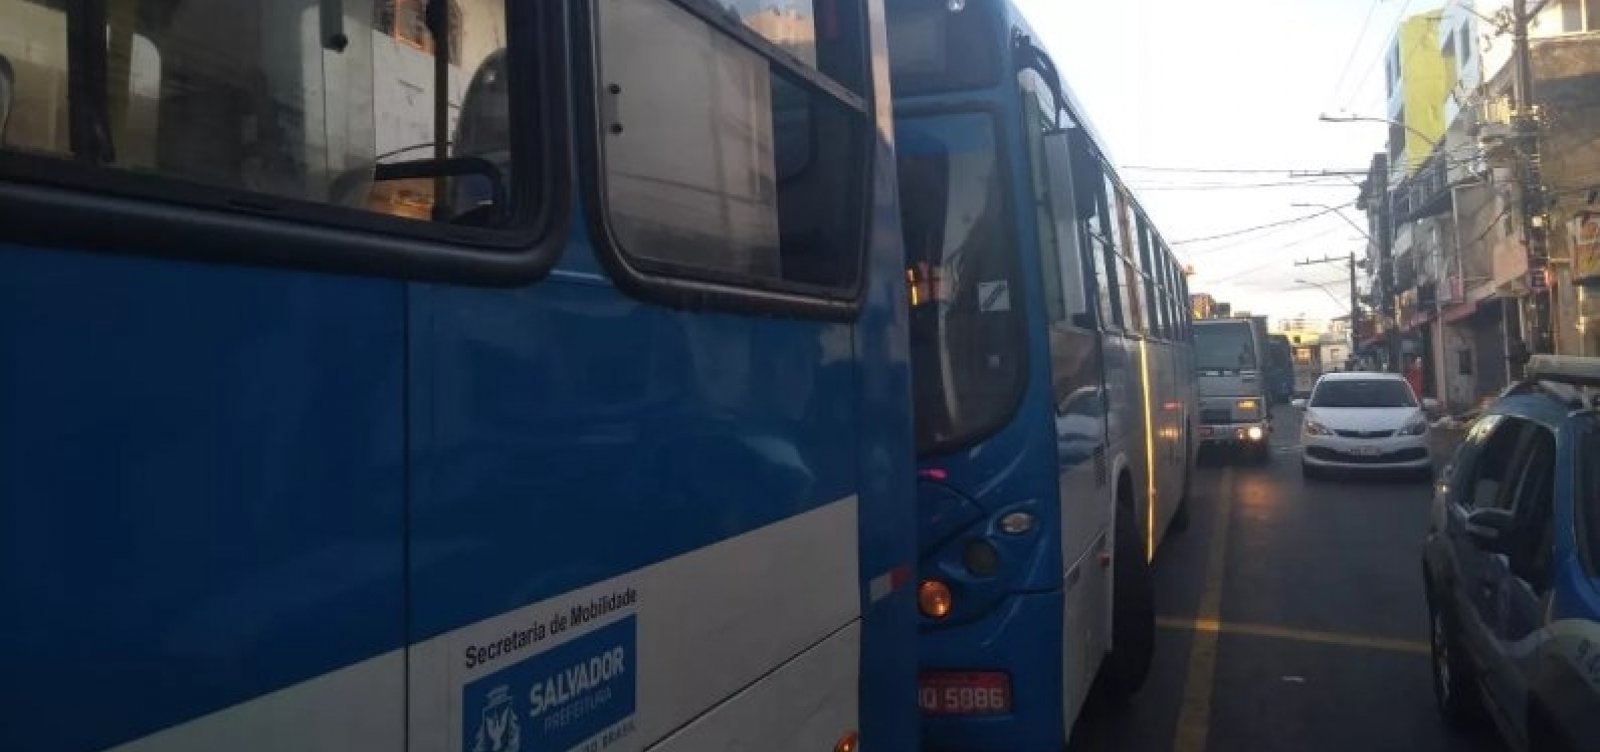 Após morte de suspeito, ônibus voltam a circular no bairro da Santa Cruz